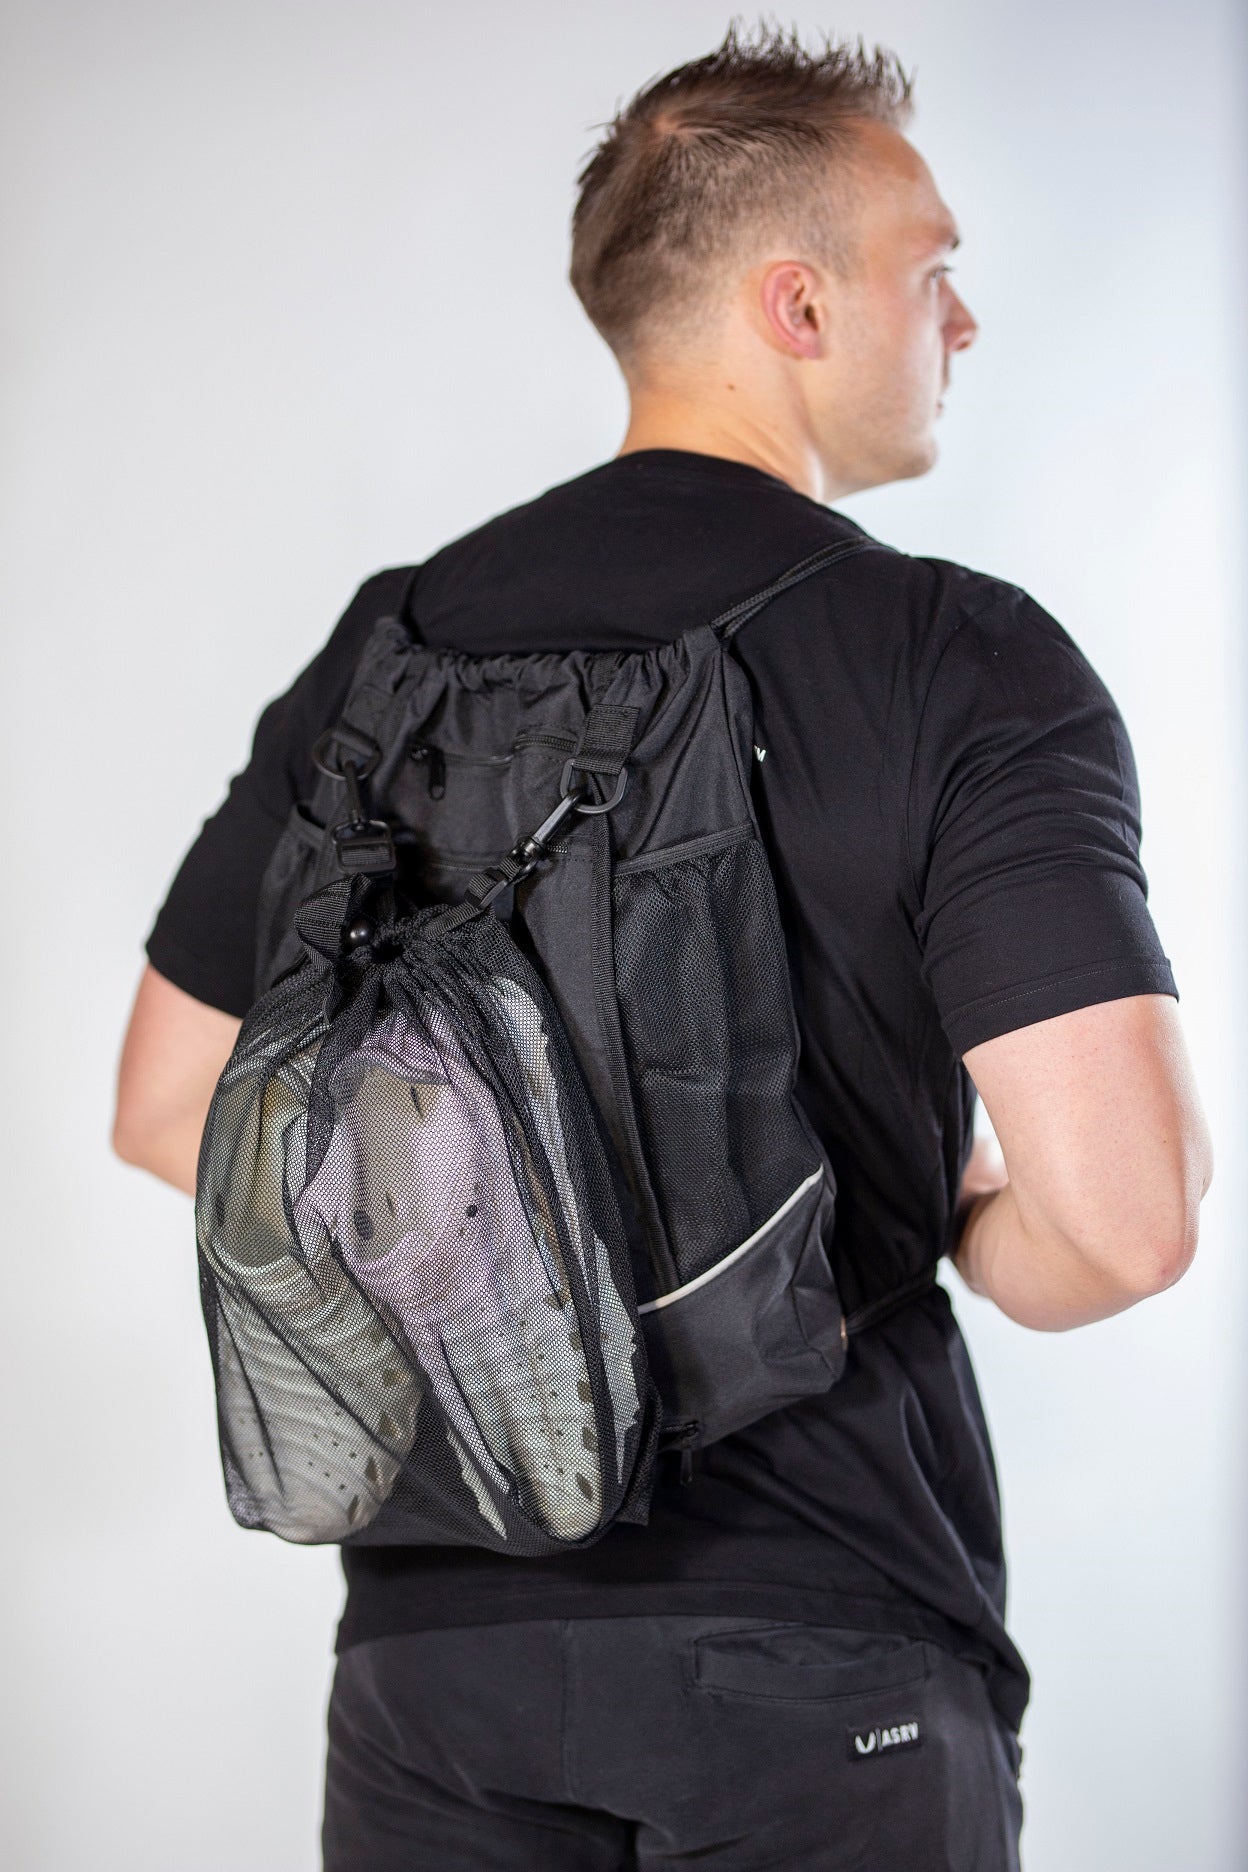 Drawstring Backpack Bag